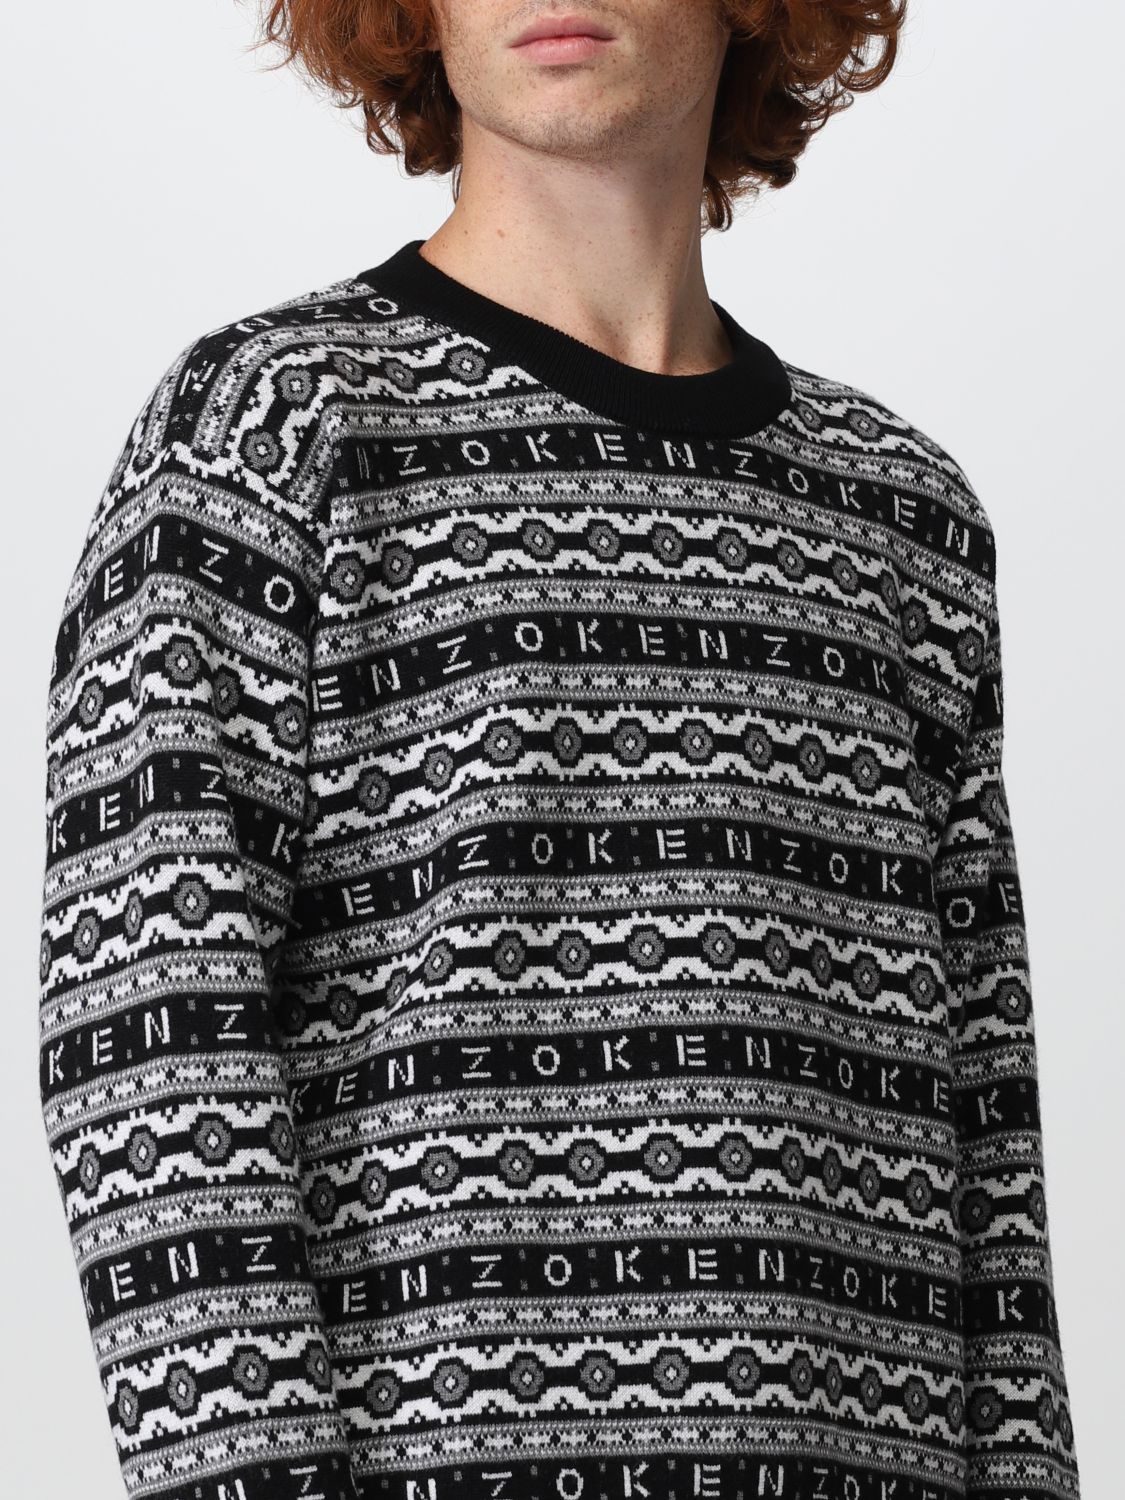 vrek Groenland Achtervolging Kenzo Outlet: sweater for man - Black | Kenzo sweater FC65PU3213CJ online  on GIGLIO.COM